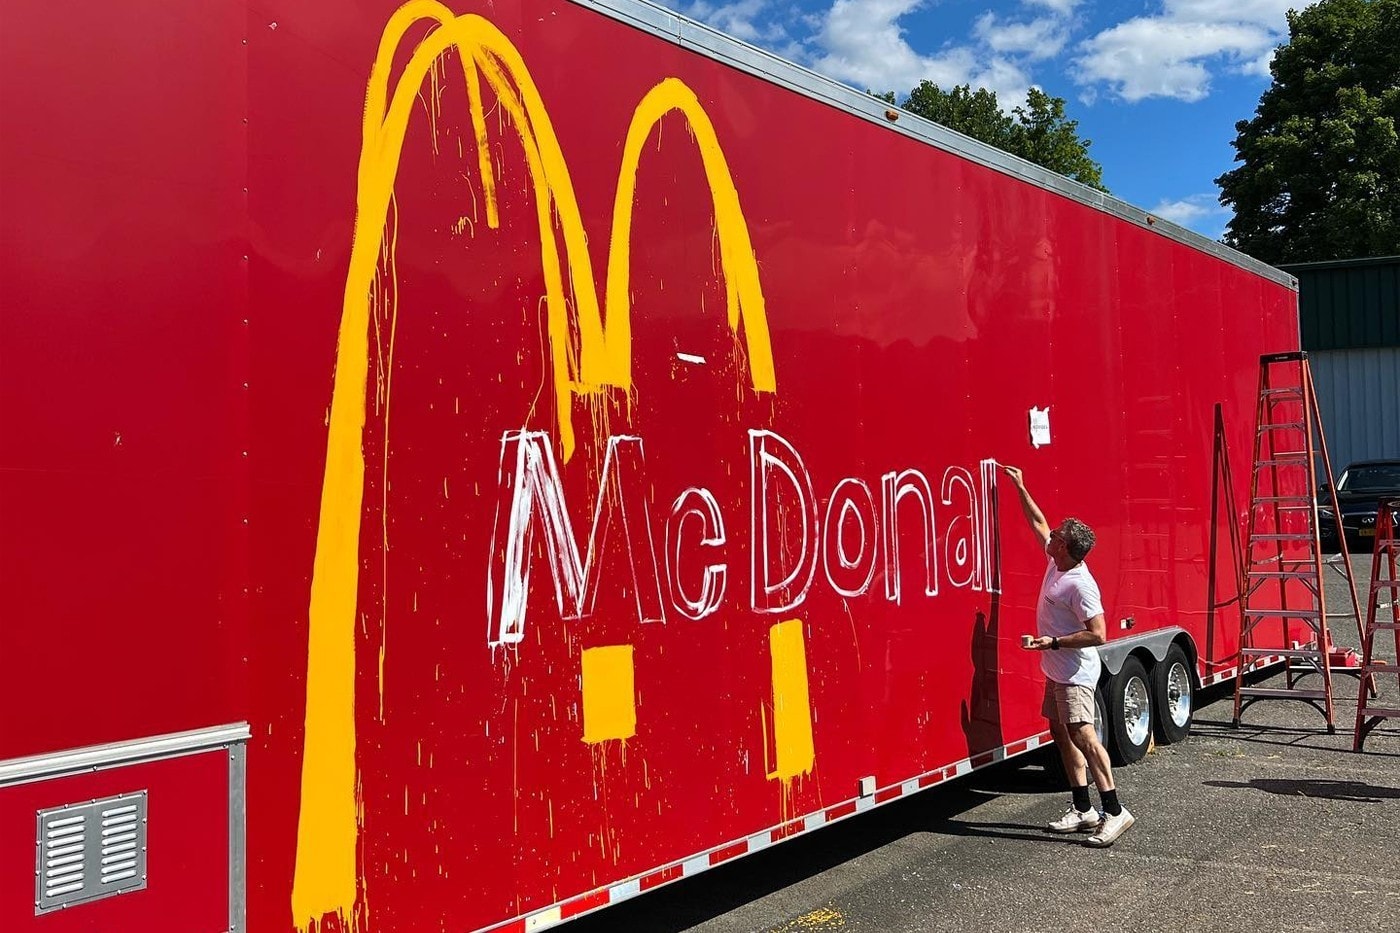 Tom Sachs 率先展示全新 McDonald's 主題公共藝術作品